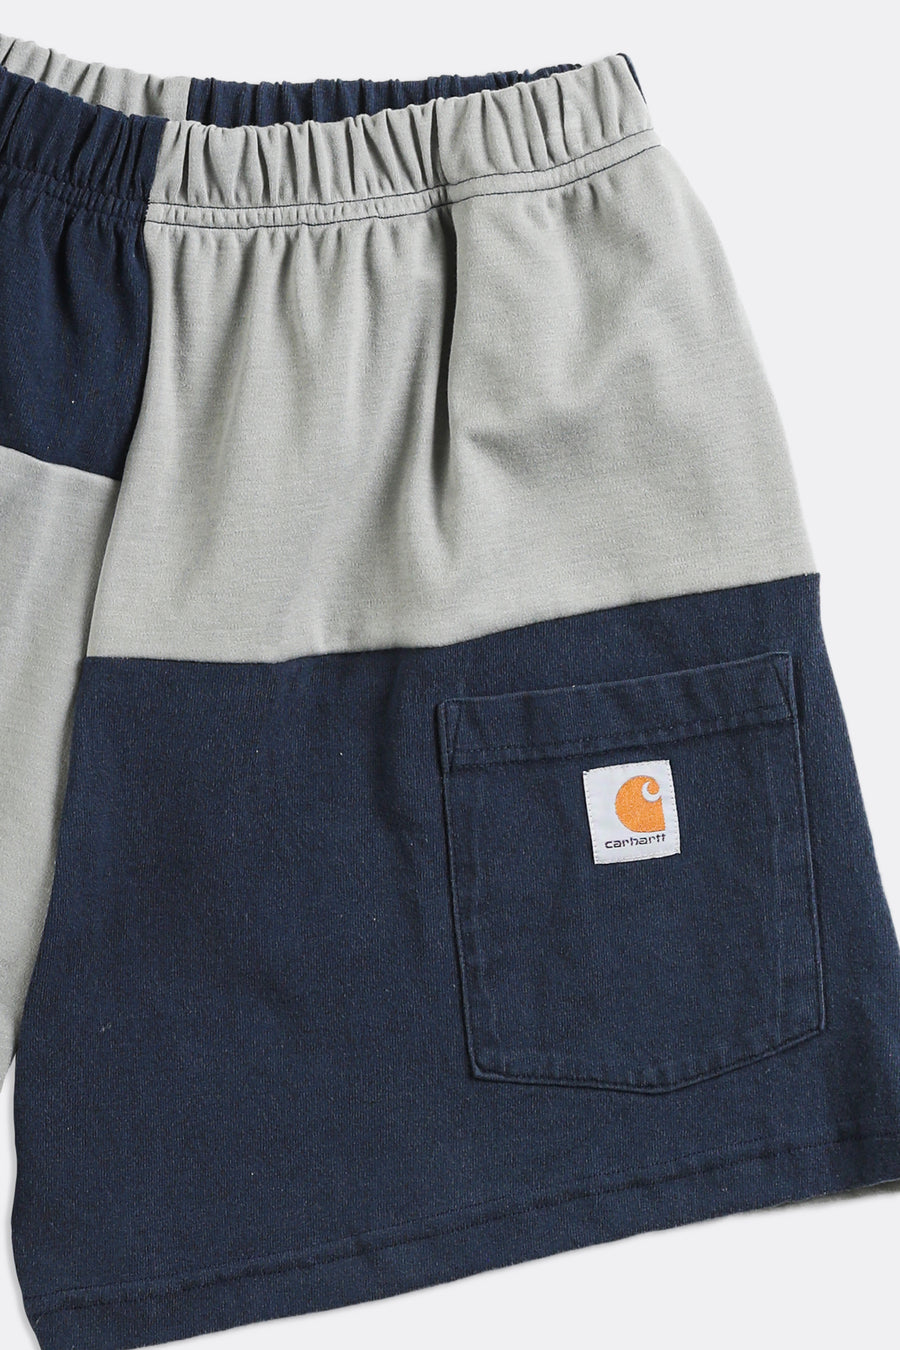 Unisex Rework Carhartt Tee Shorts - XS, S, M, L, XL